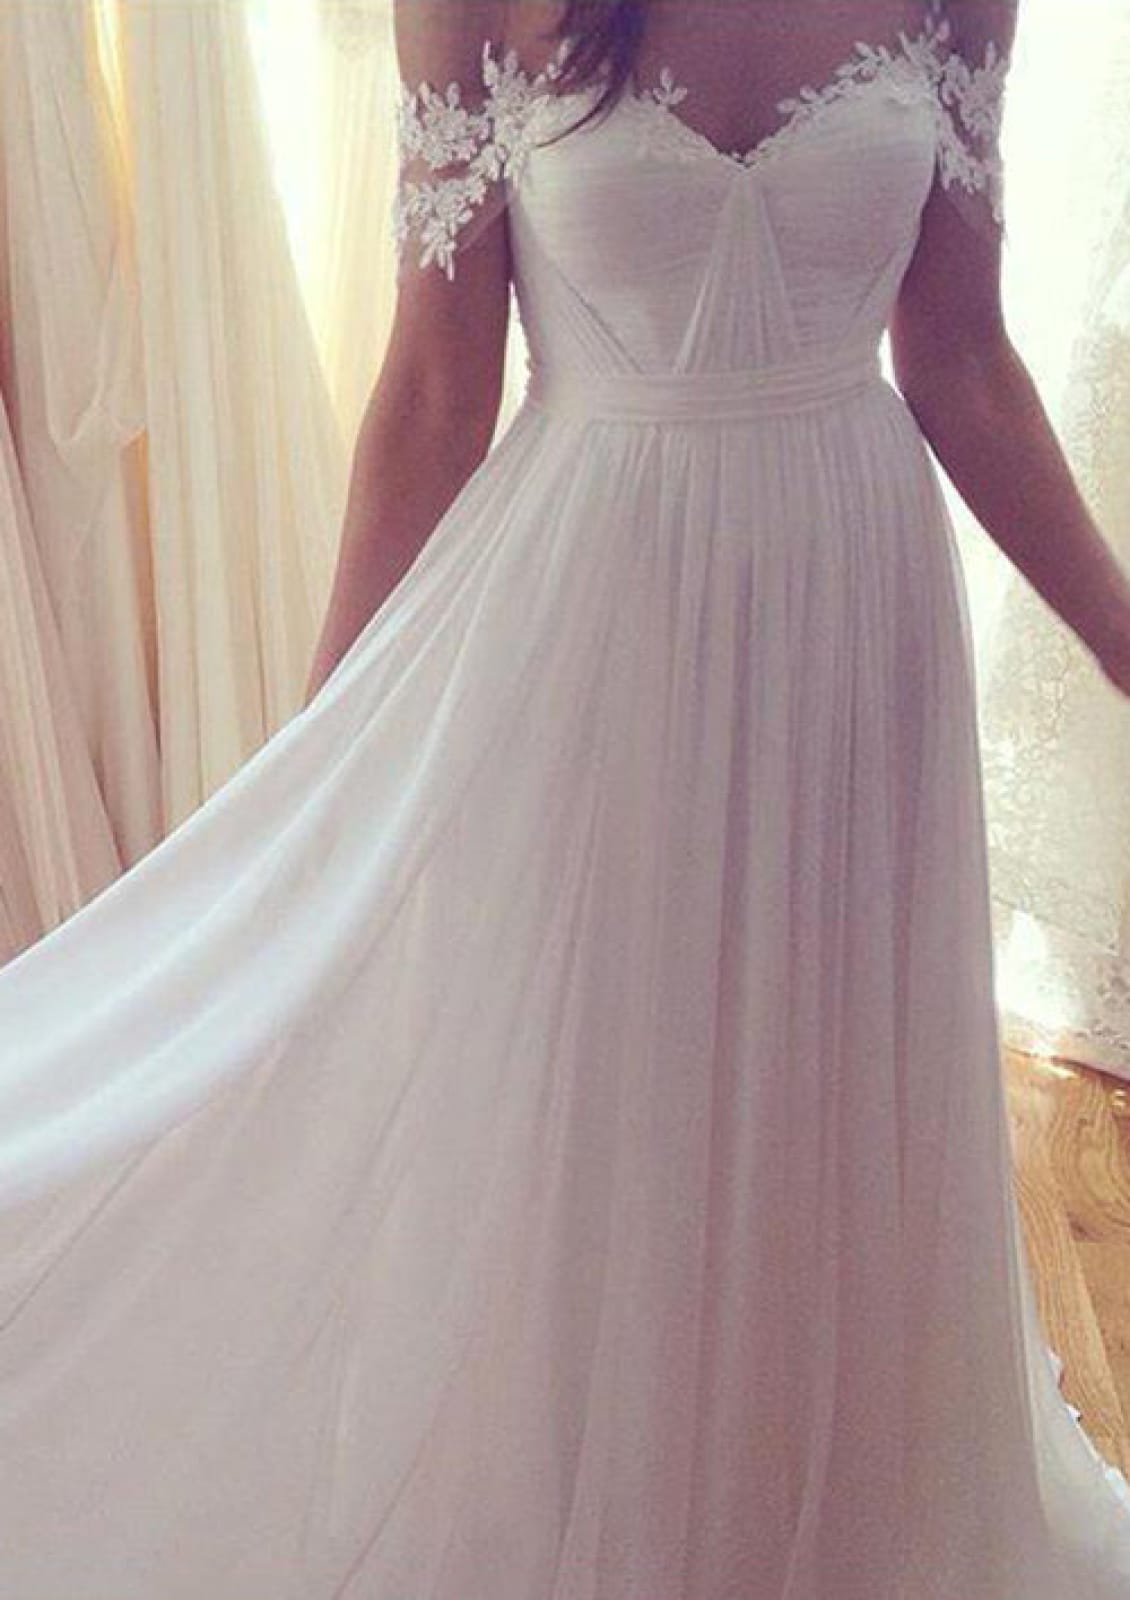 Off Shoulder Chiffon Pleats A-line Long Bridal Gown Wedding Dress